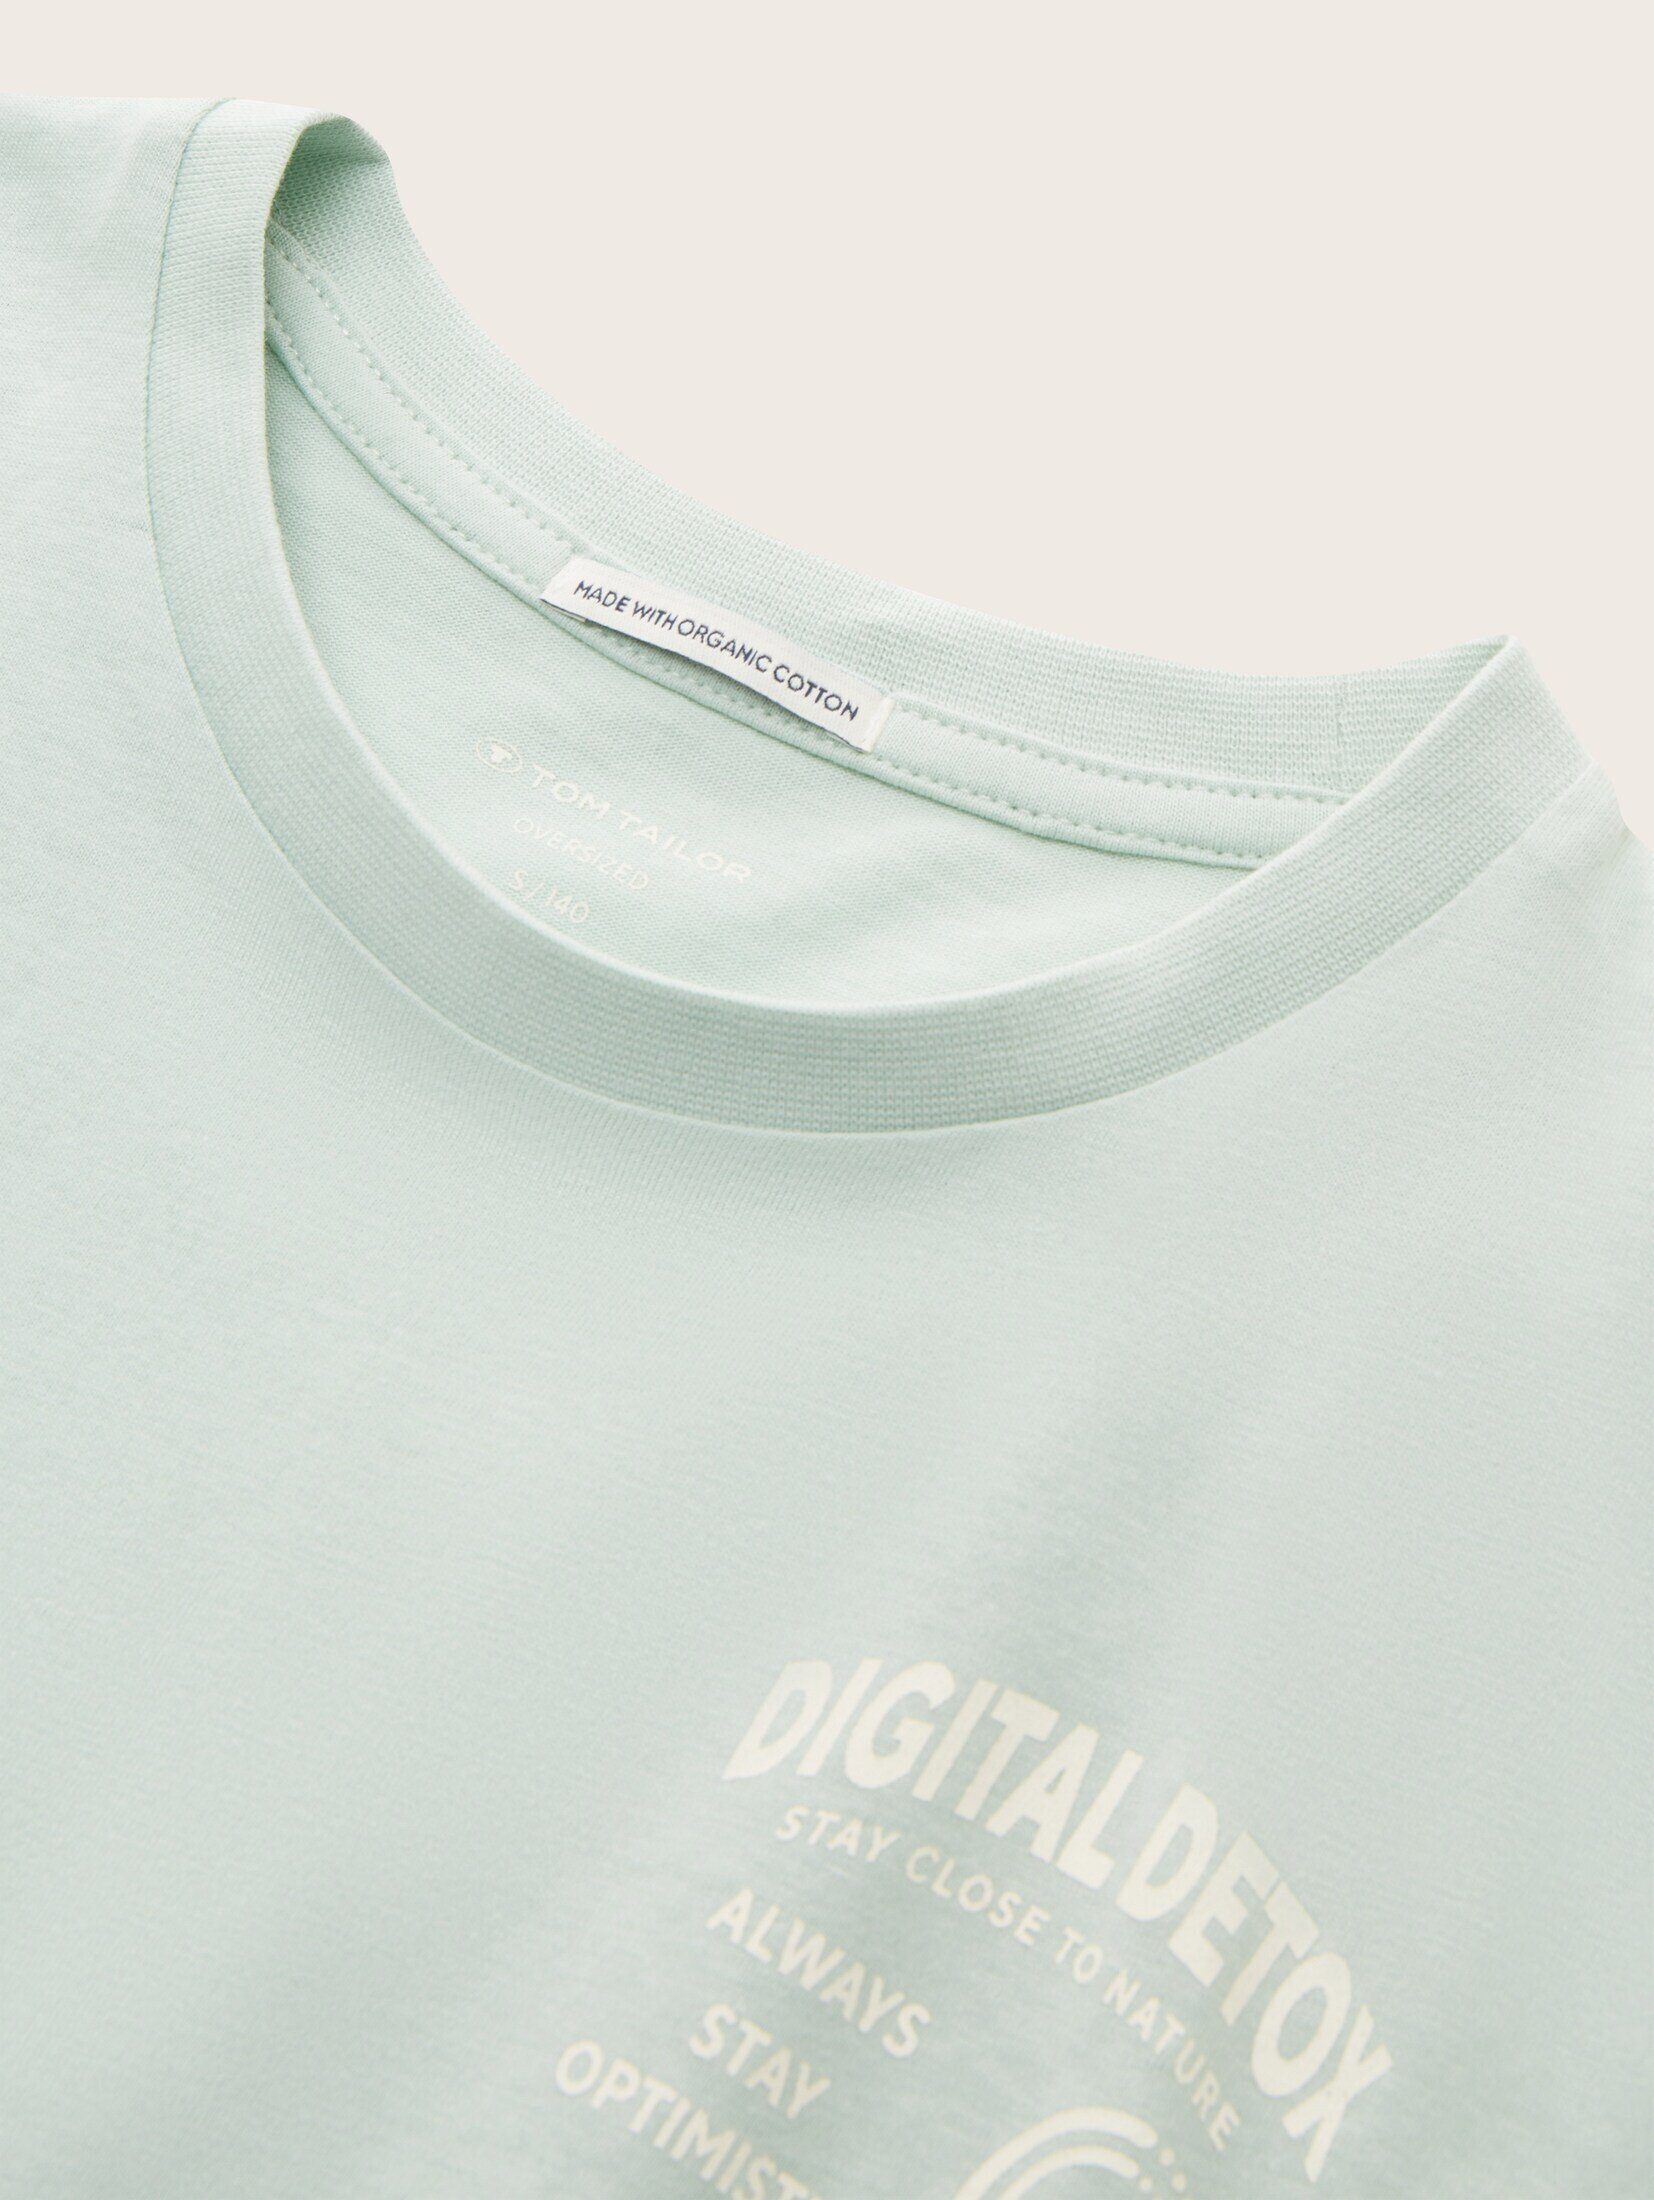 TOM TAILOR T-Shirt T-Shirt Vintage mit Mint Textprint